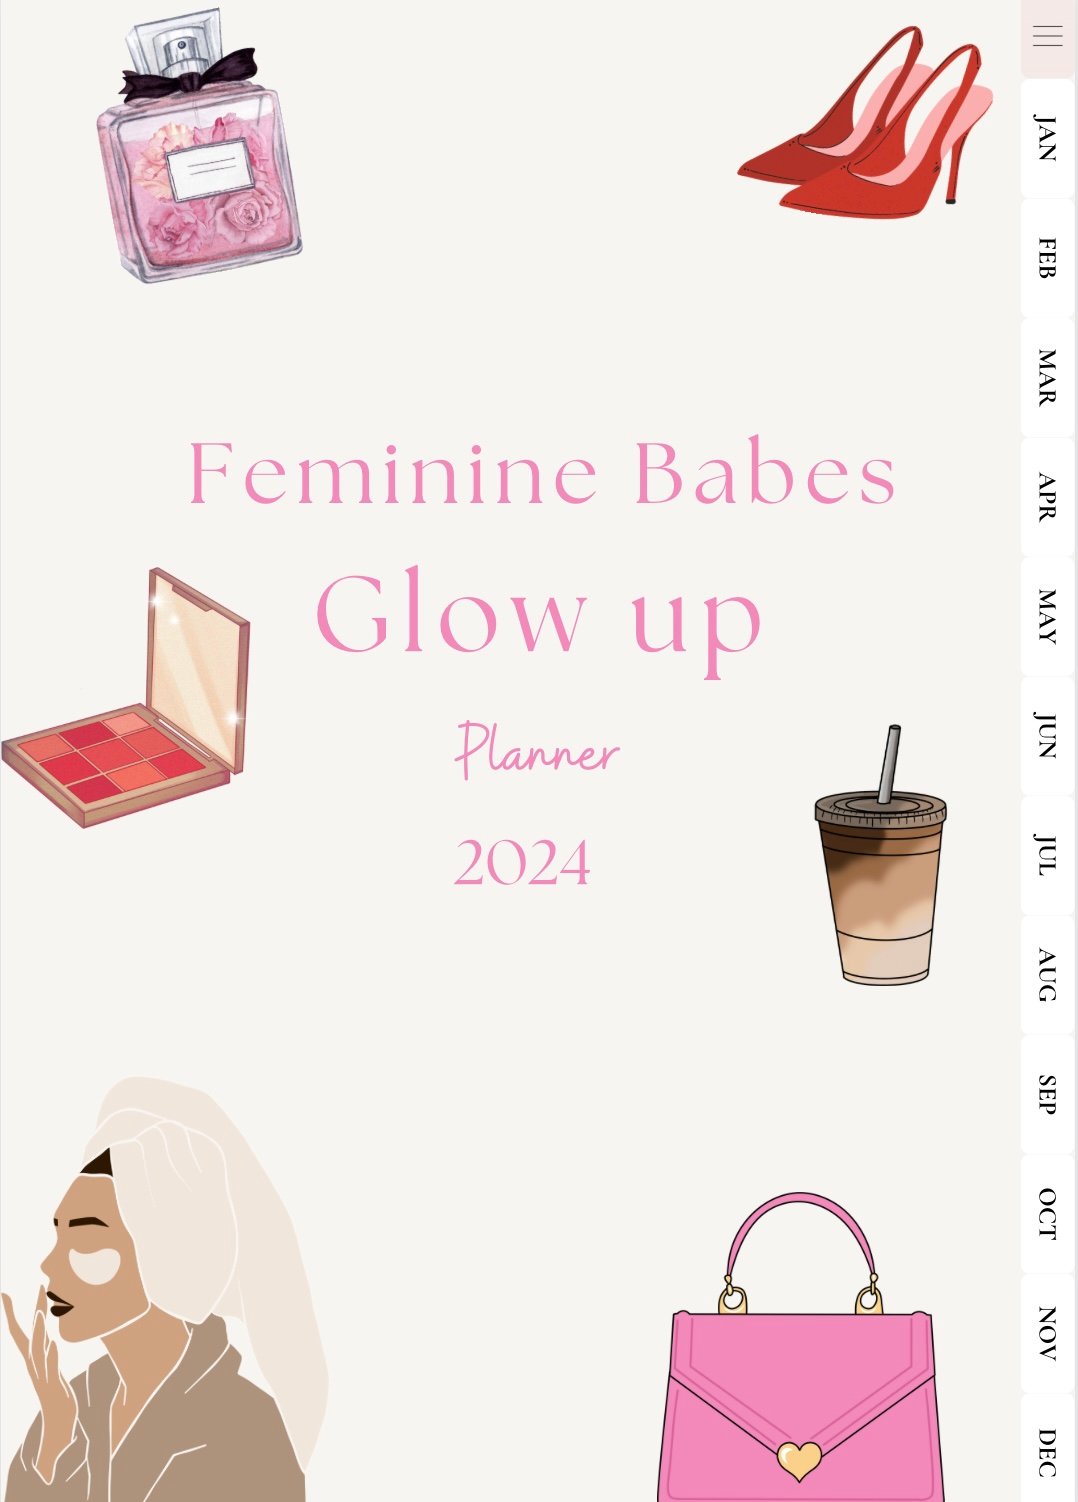 Feminine babes Glow Up Planner 2024 - Payhip